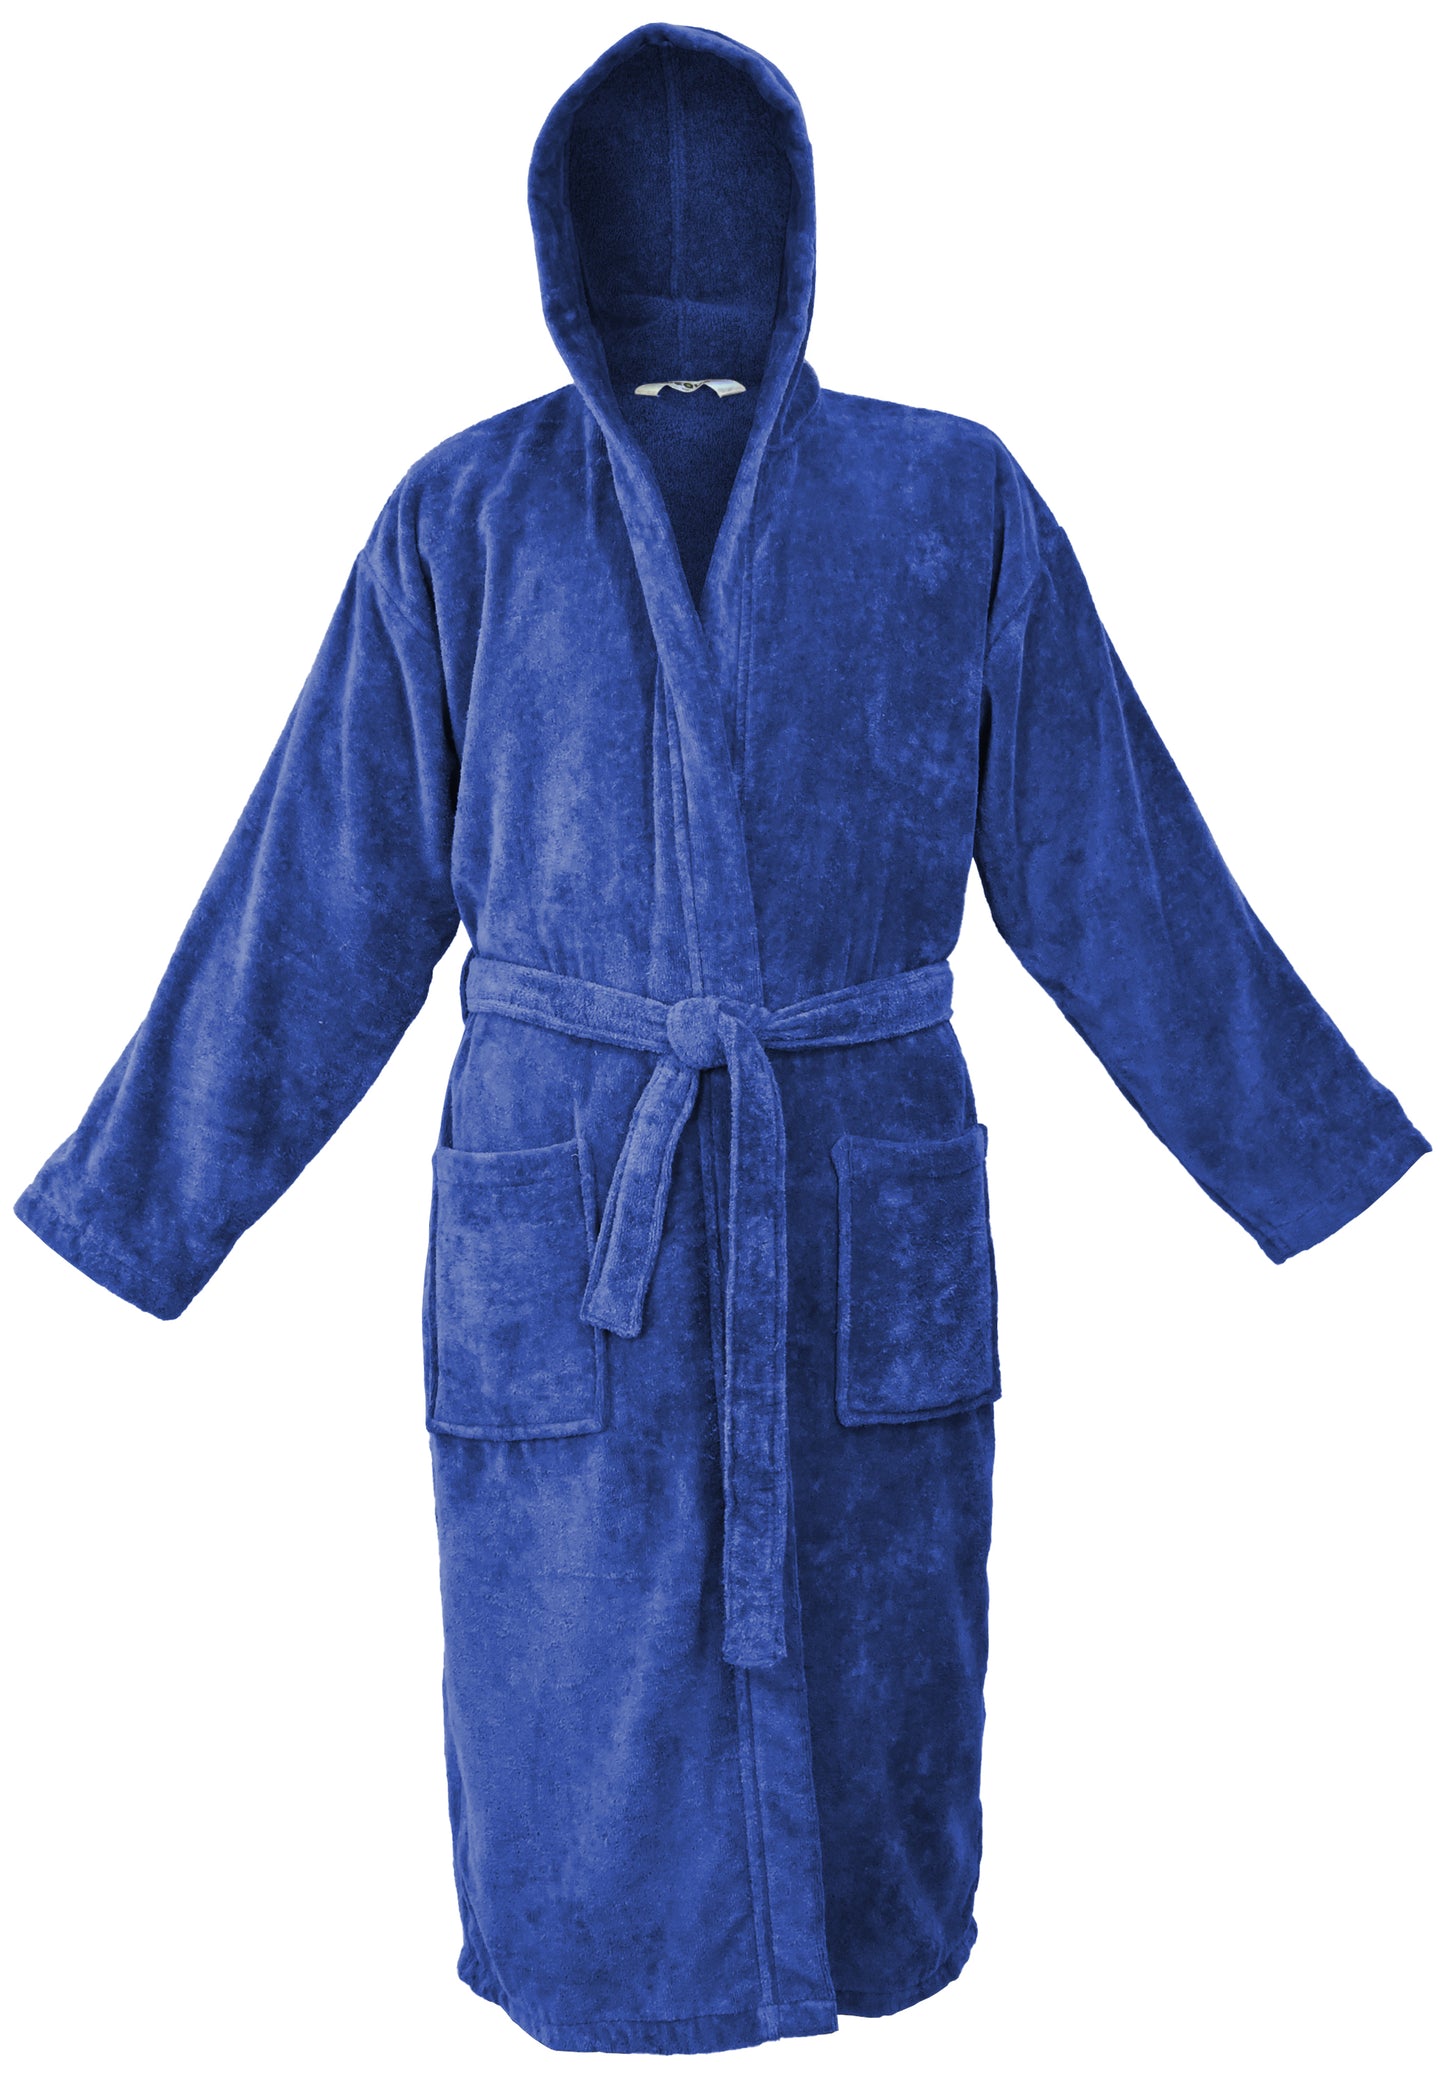 COMBED COTTON TERRY TOWELING BATHROBE-Bathrobe-Weave Essentials-Royal Blue-S/M-Weave Essentials